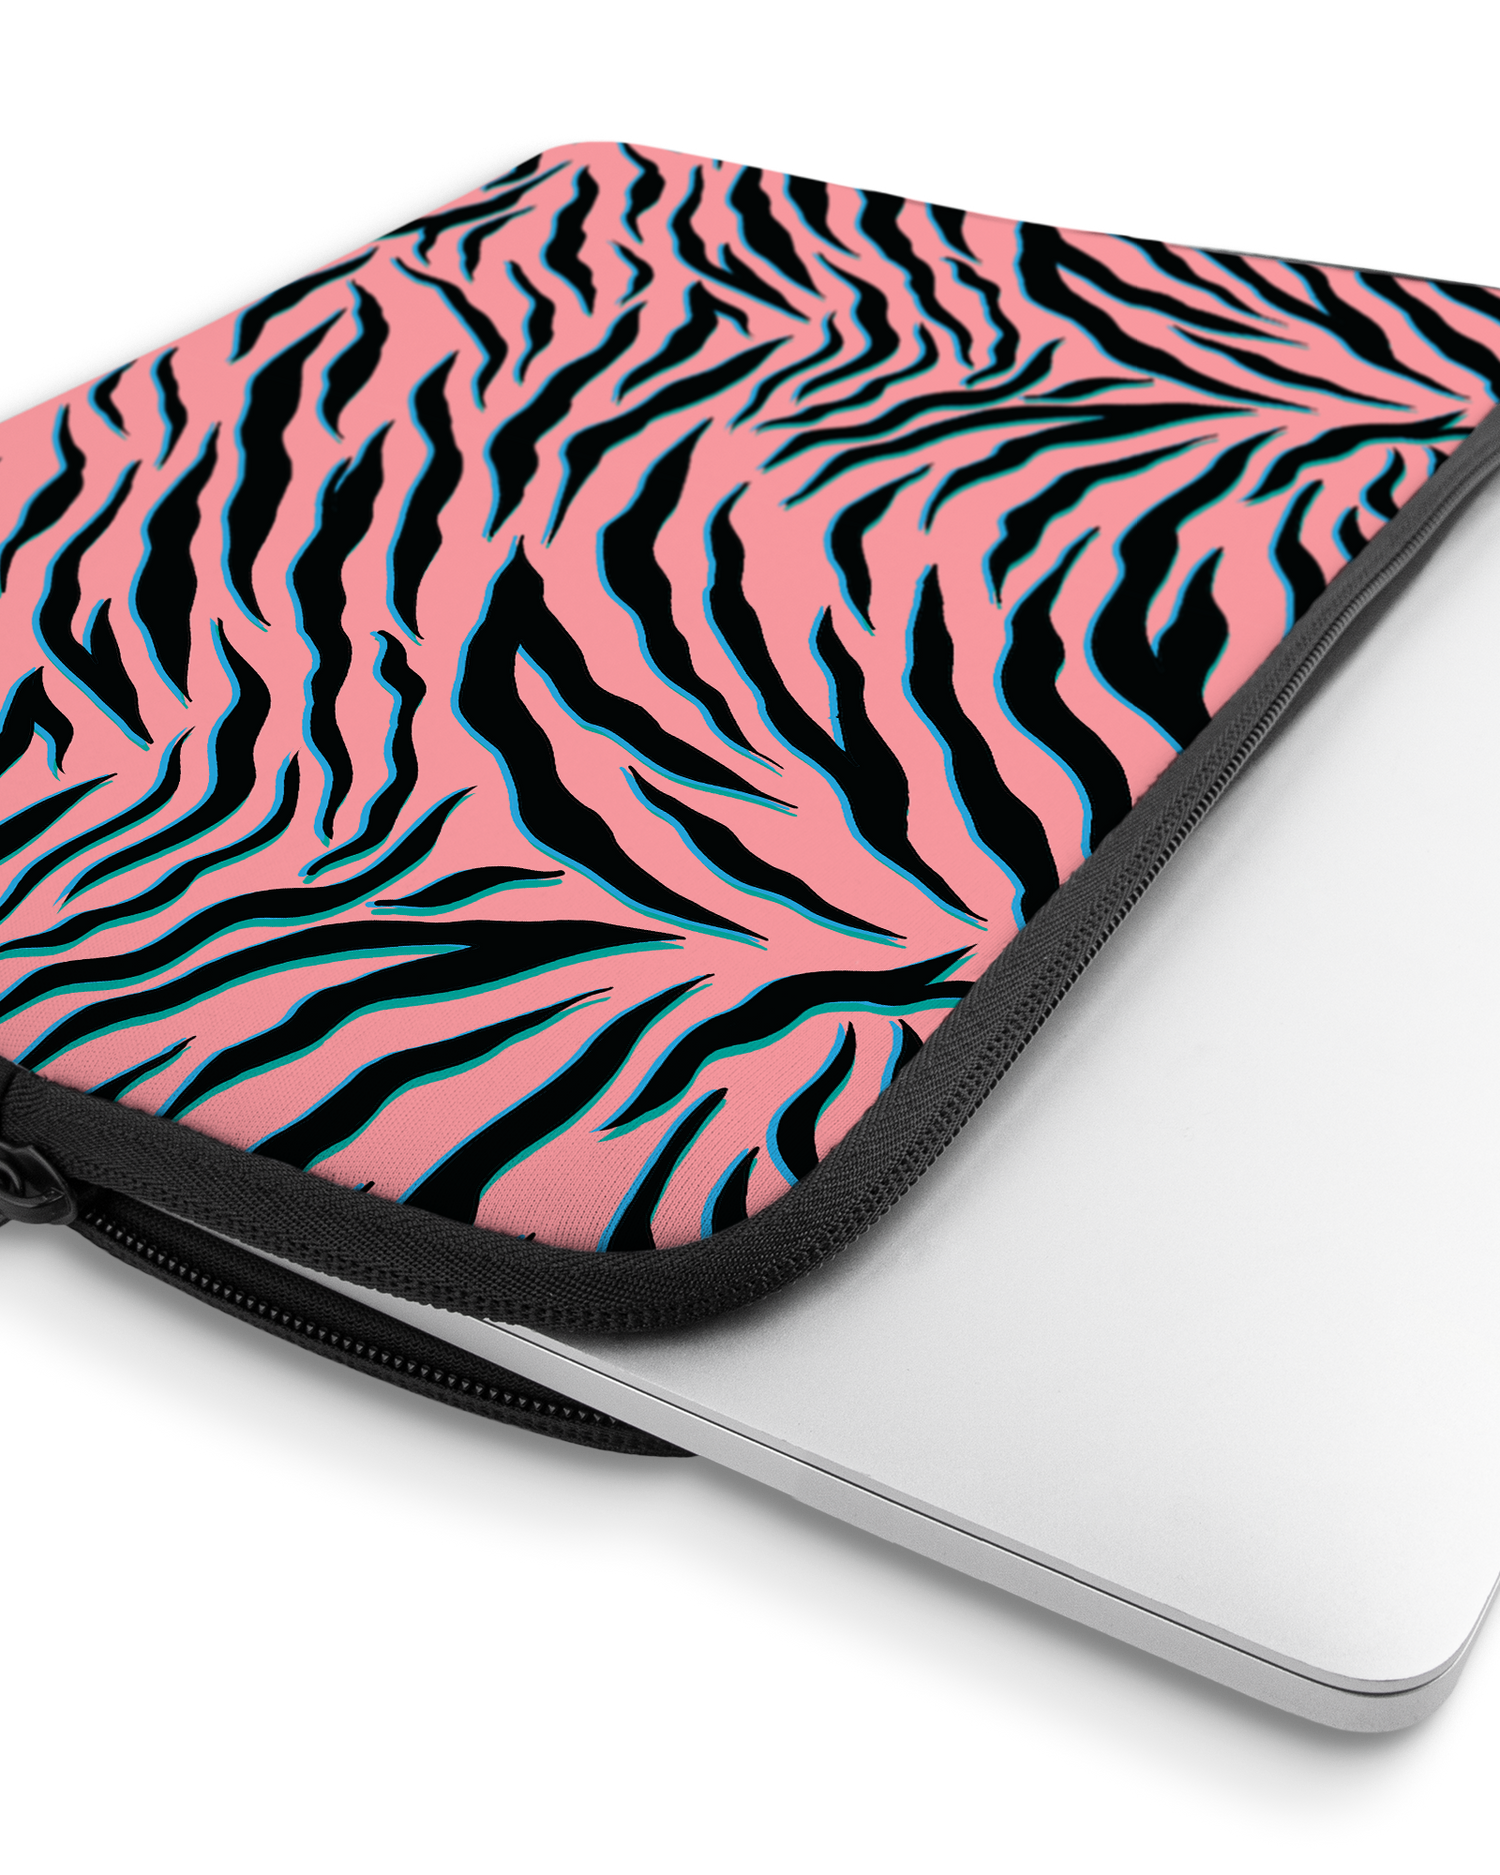 Pink Zebra Laptop Case 13 inch with device inside